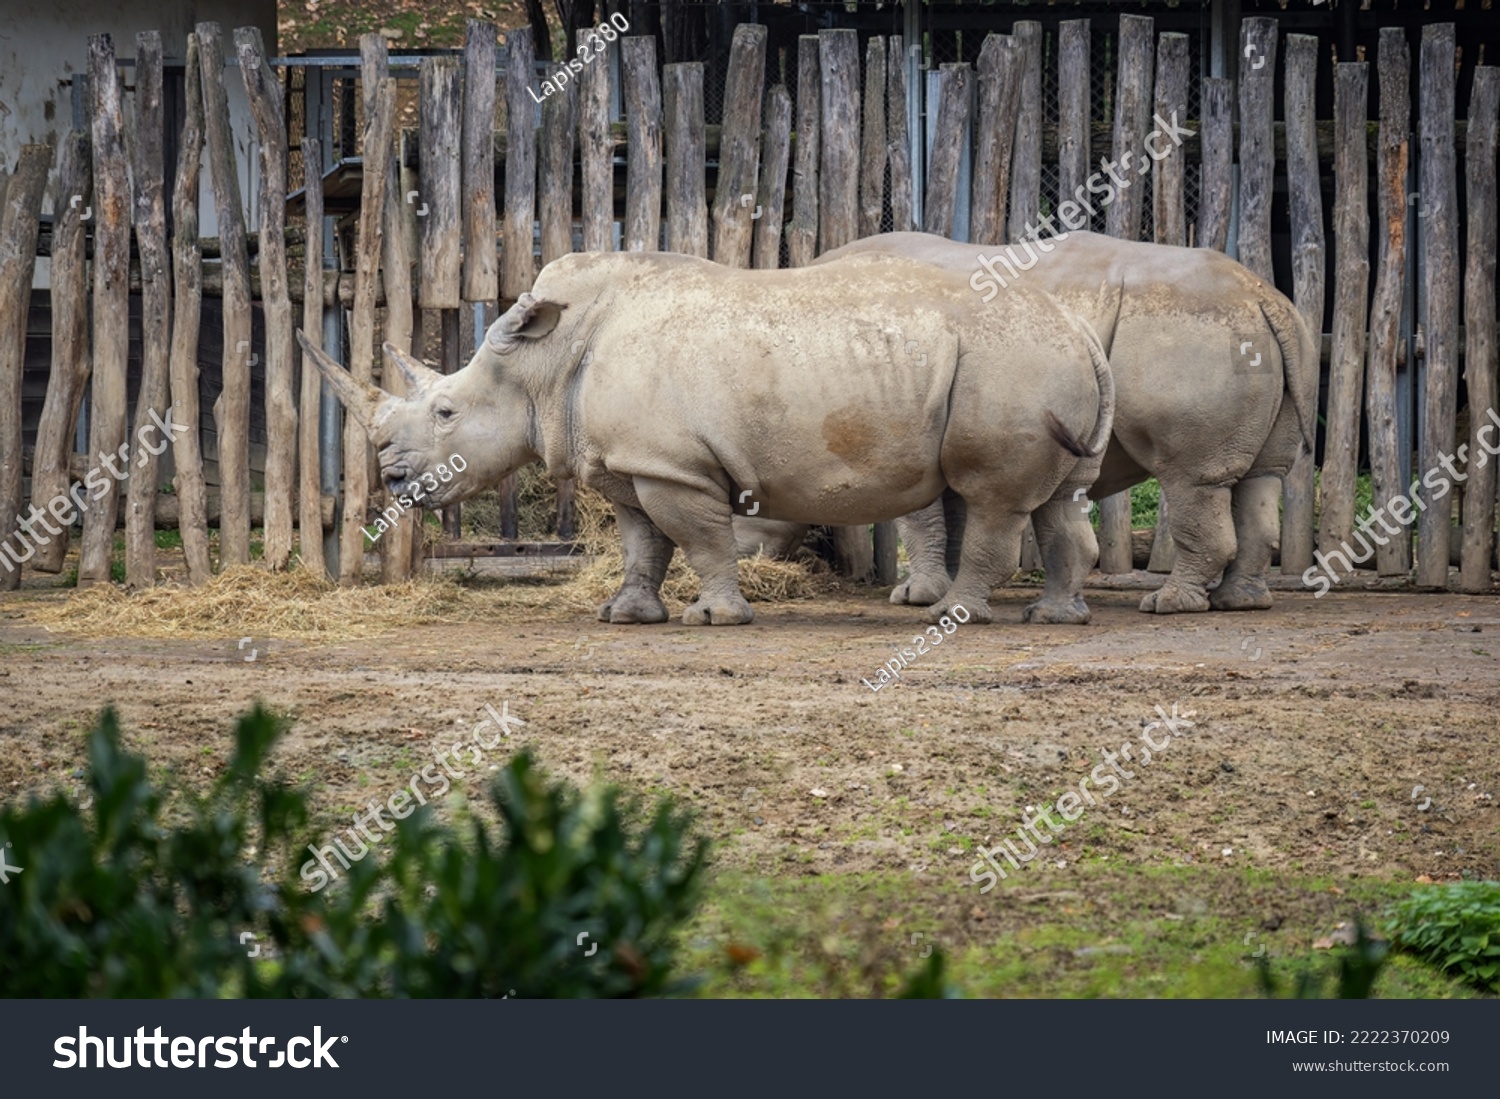 Rhino captive breeding and wooden enclosure. #2222370209